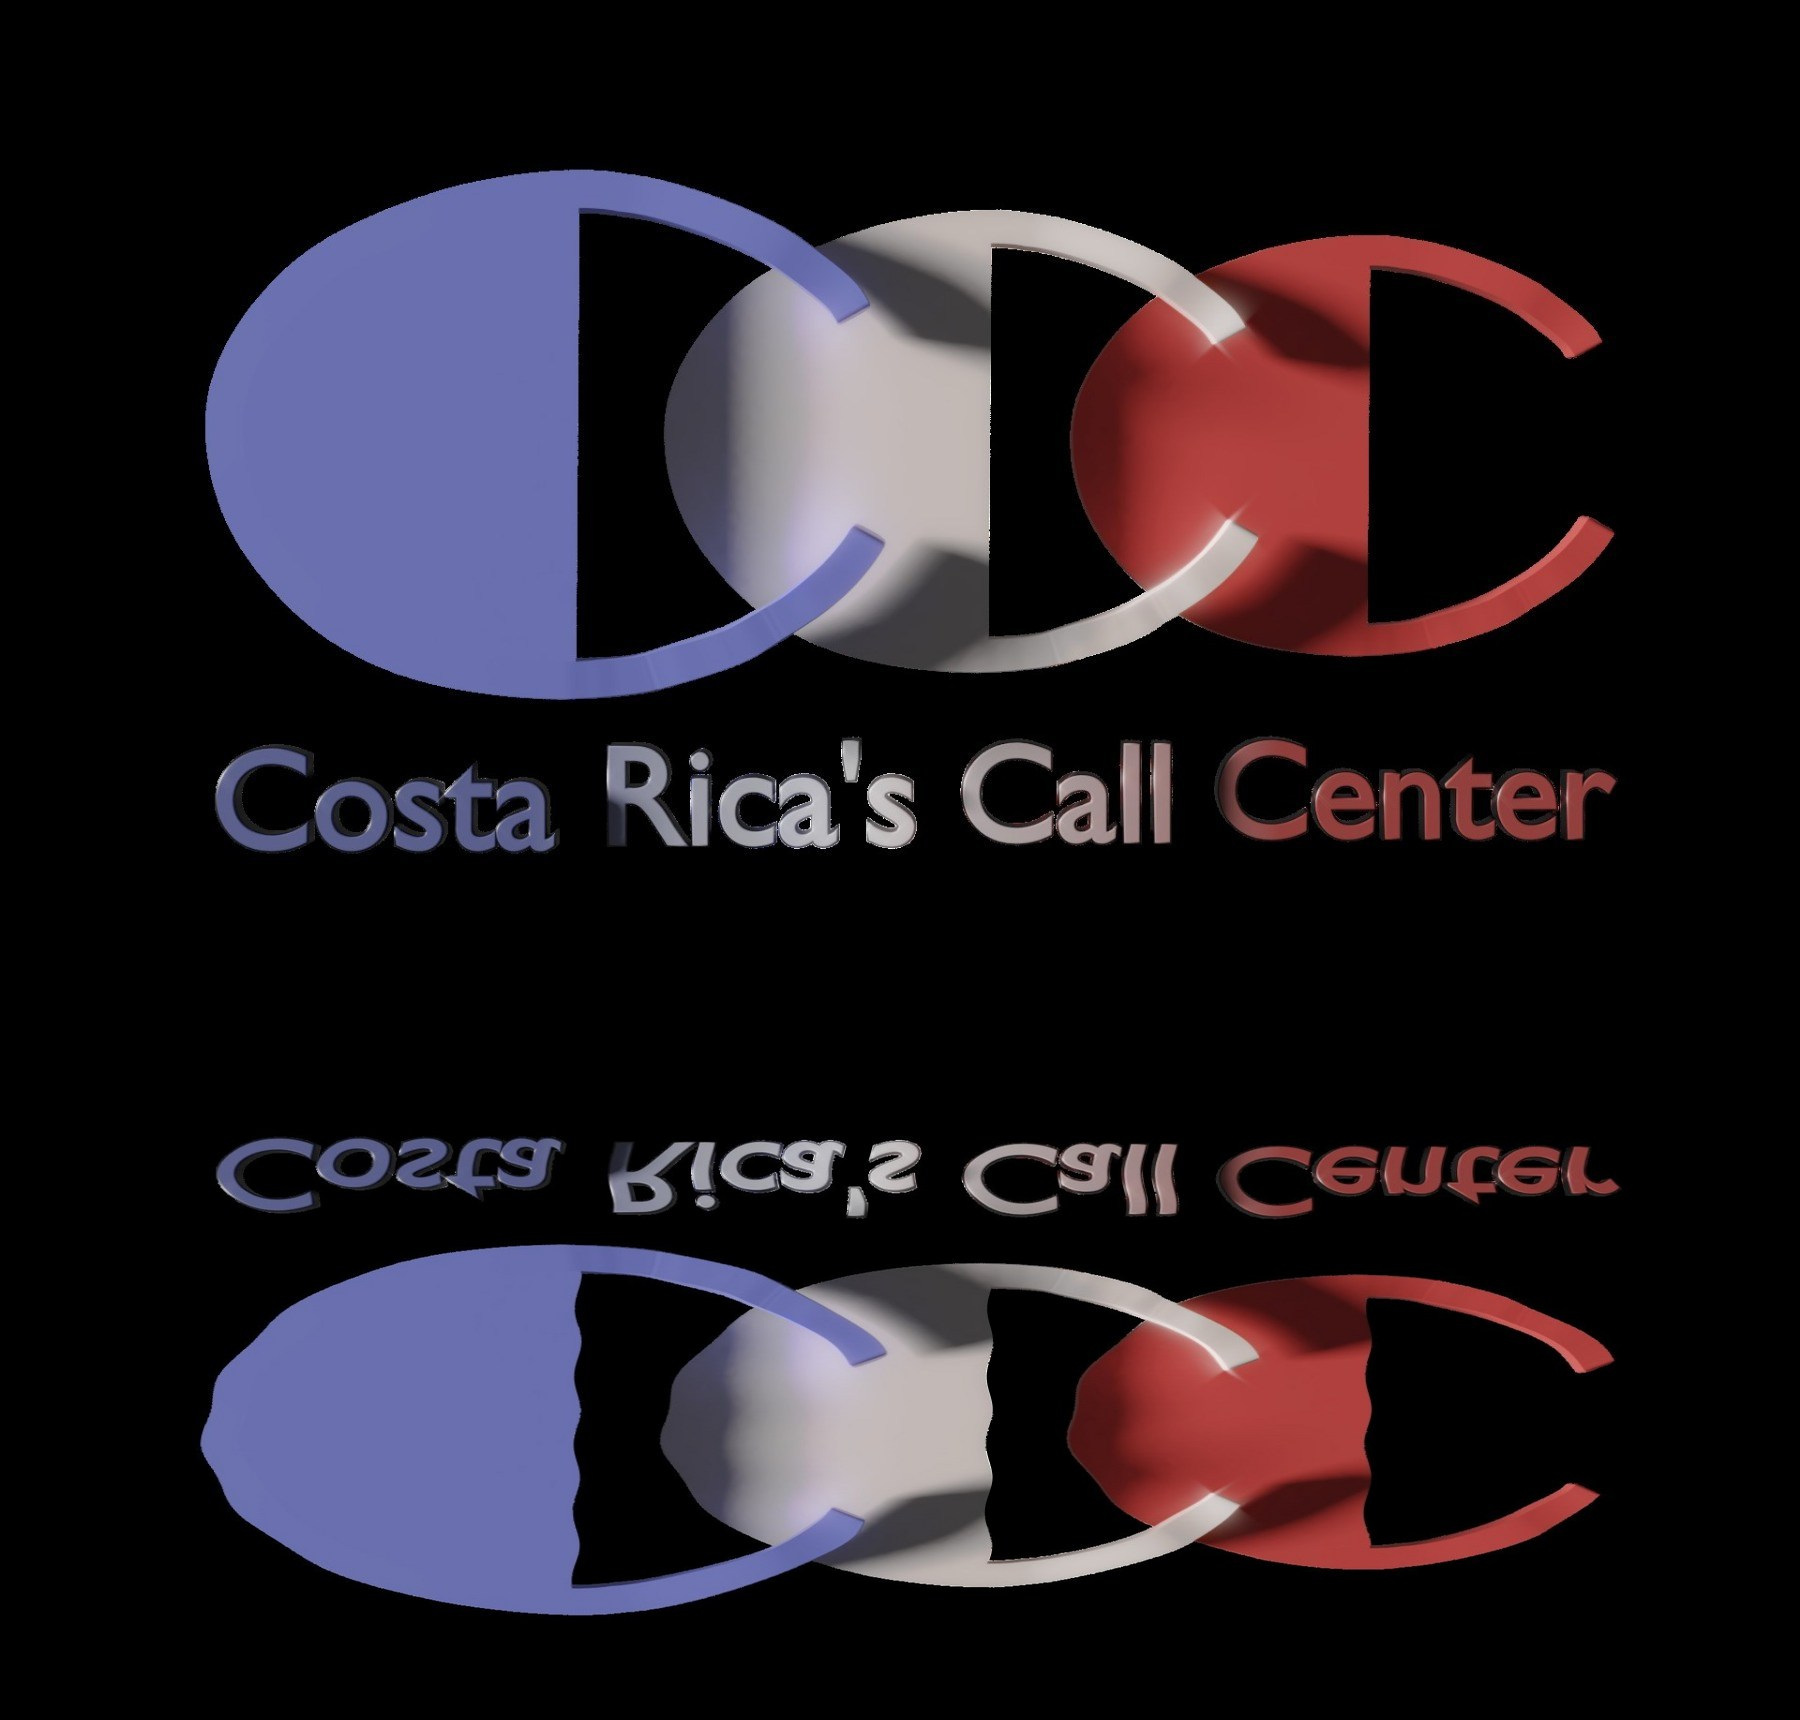 TELEMARKETING NOTES COSTA RICA.jpg  by richardblank